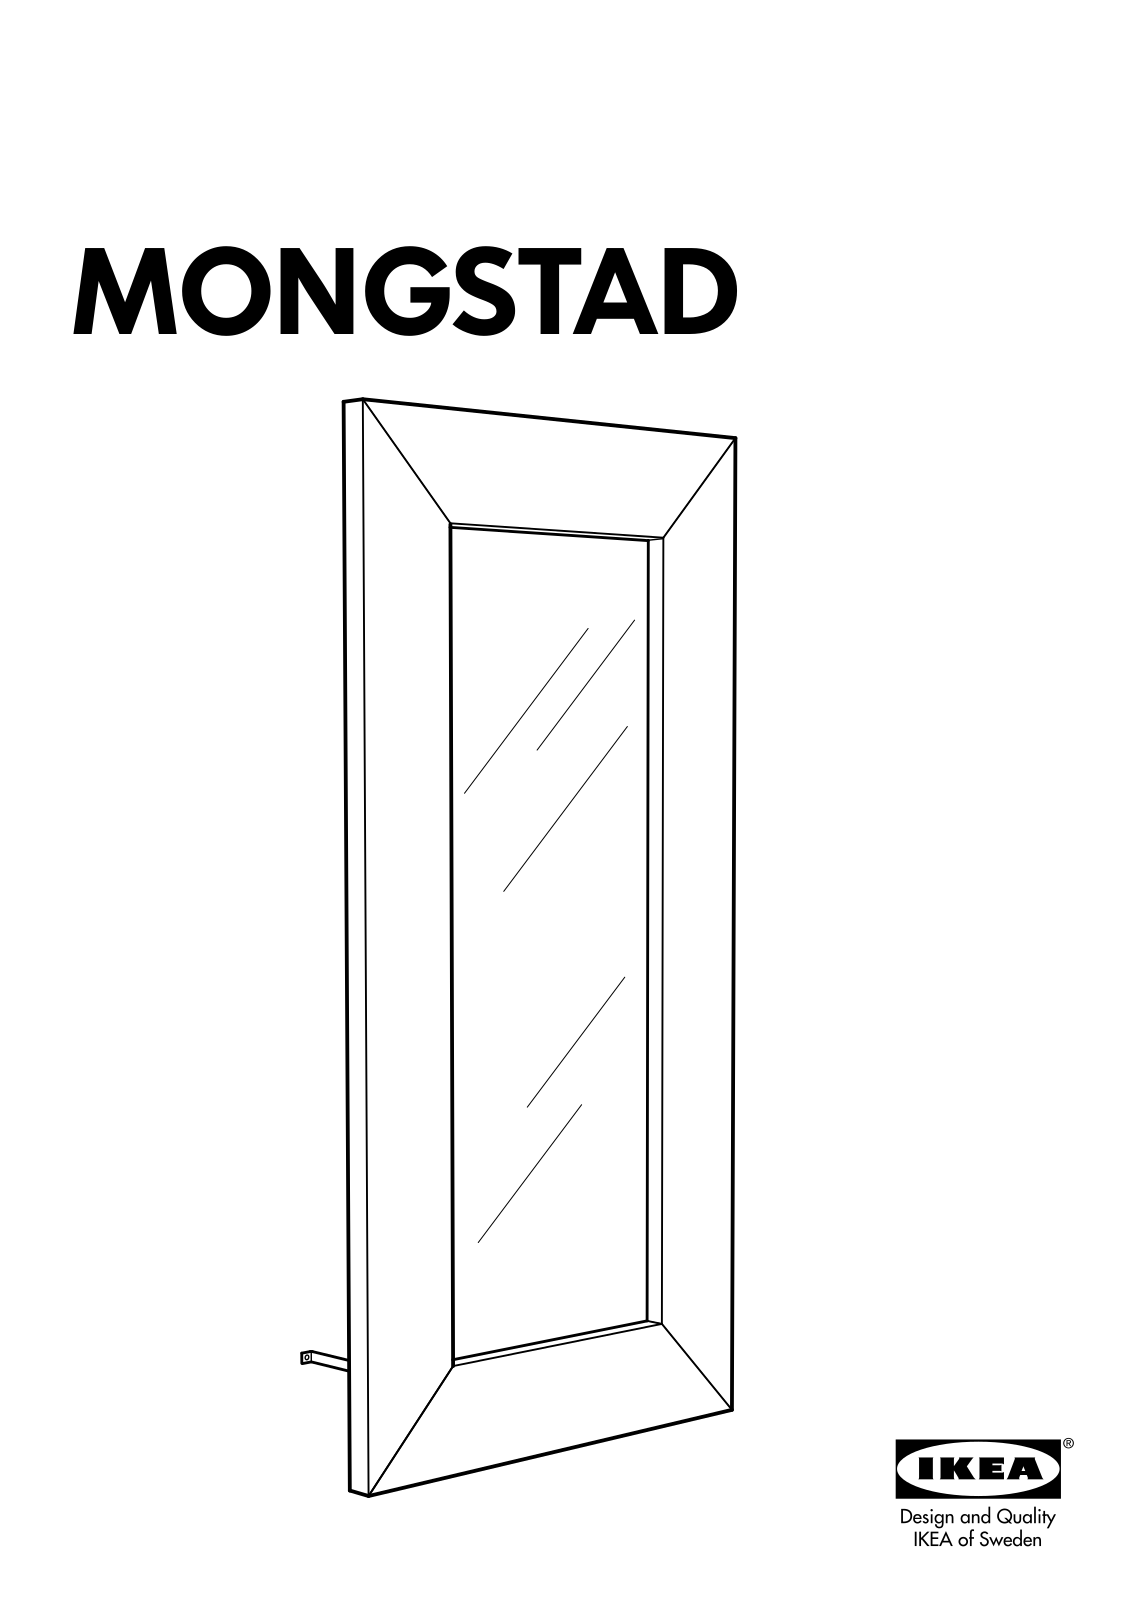 IKEA MONGSTAD MIRROR Assembly Instruction